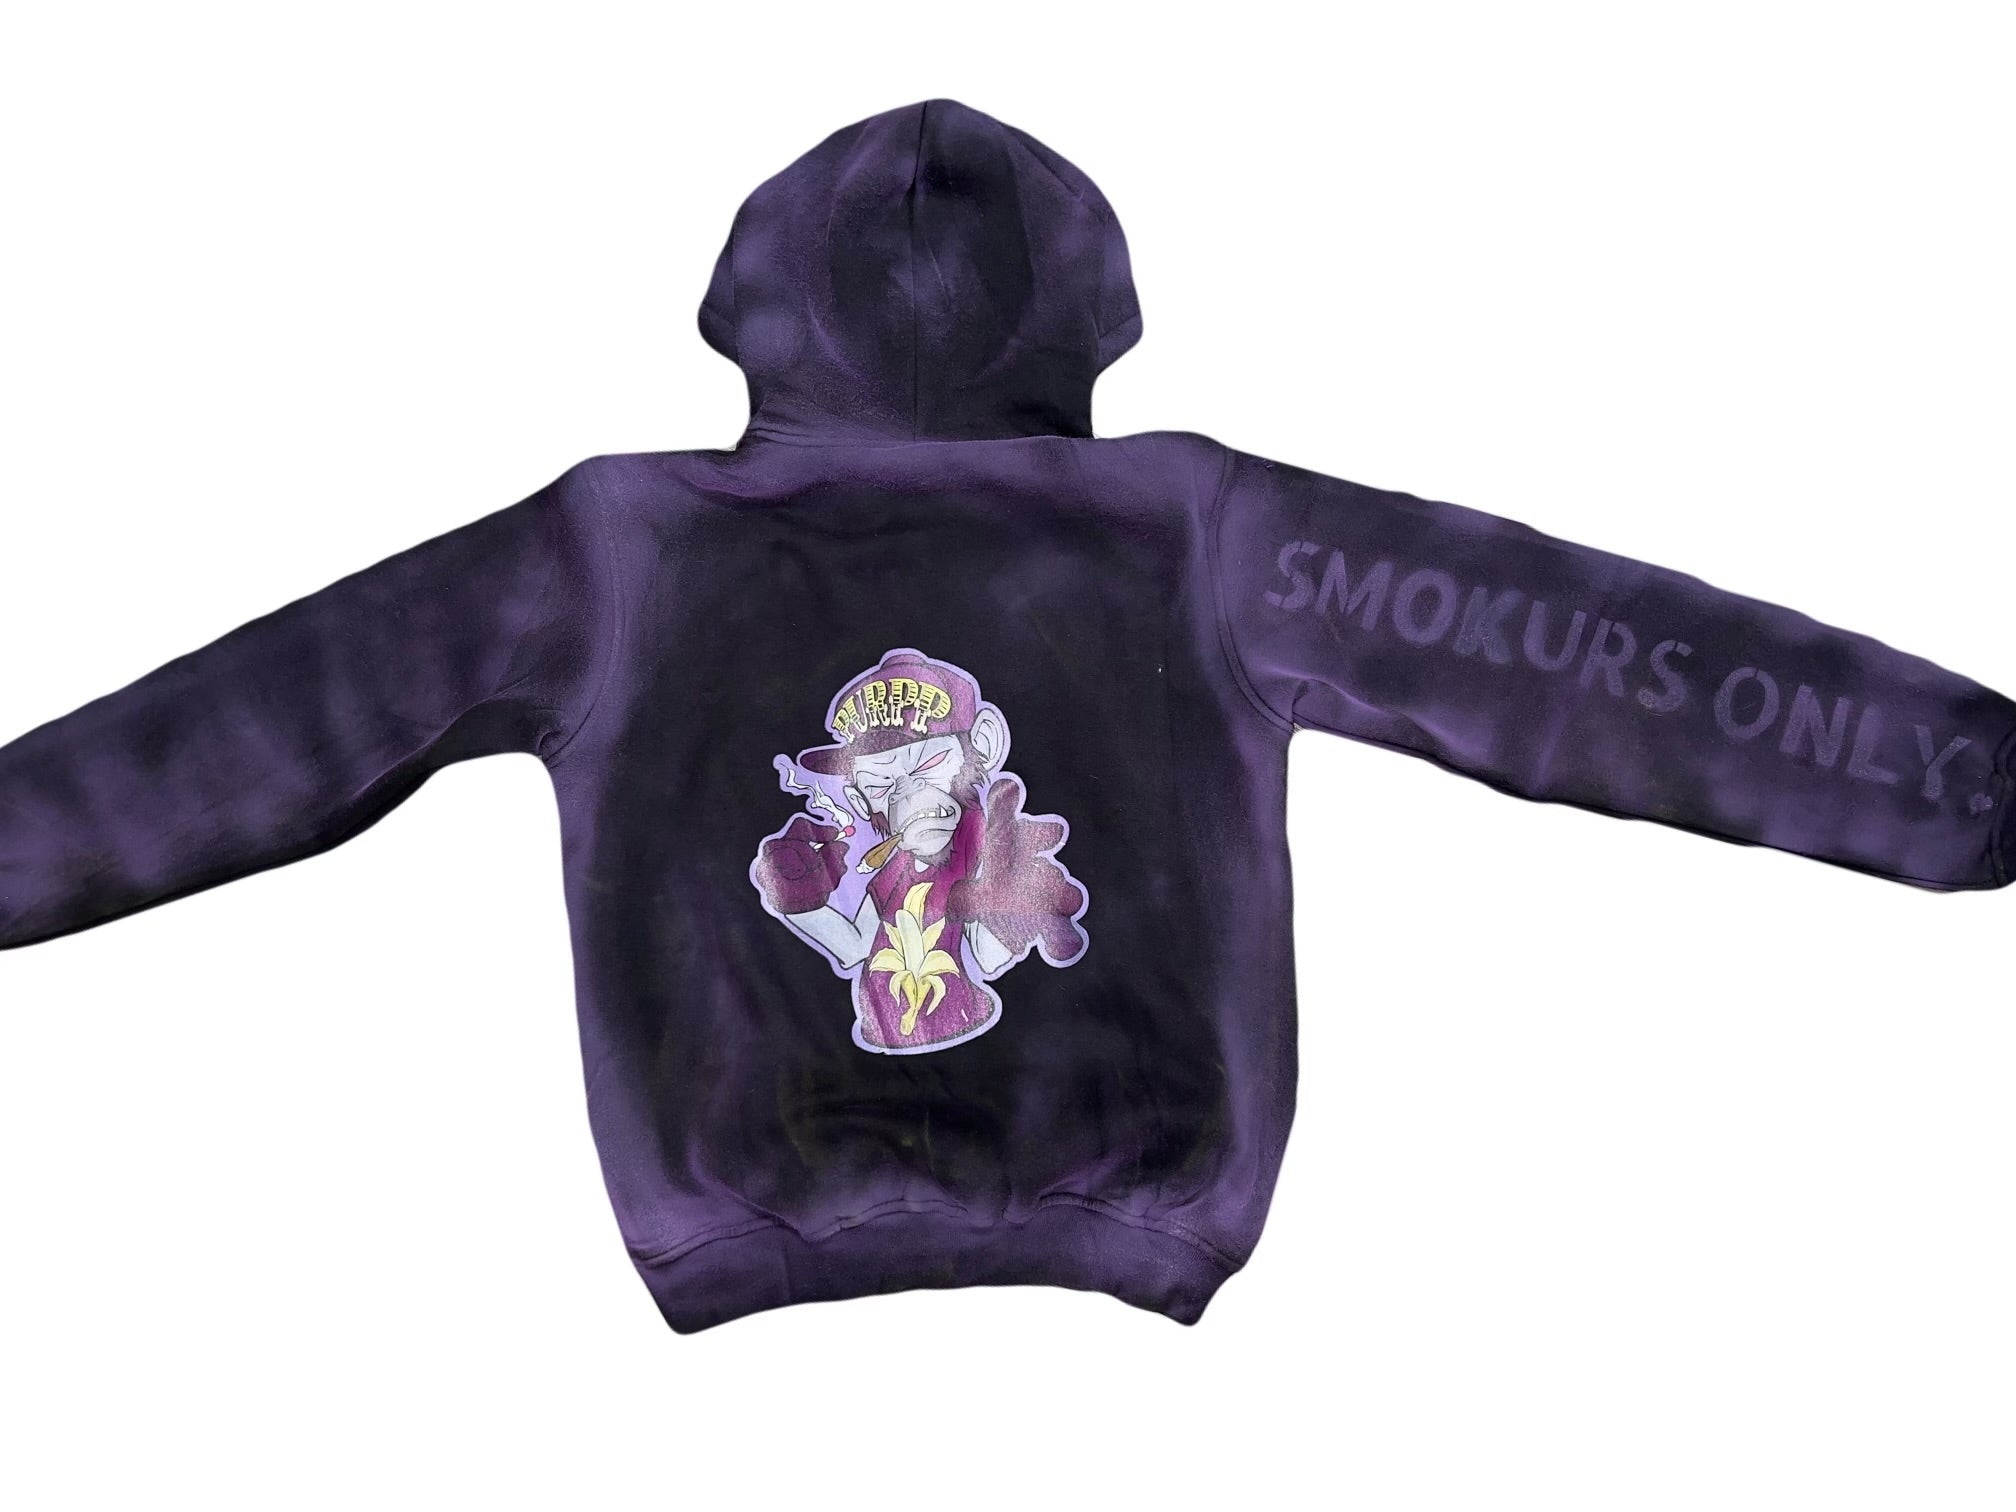 Smokurs Only (purple) Hoodie